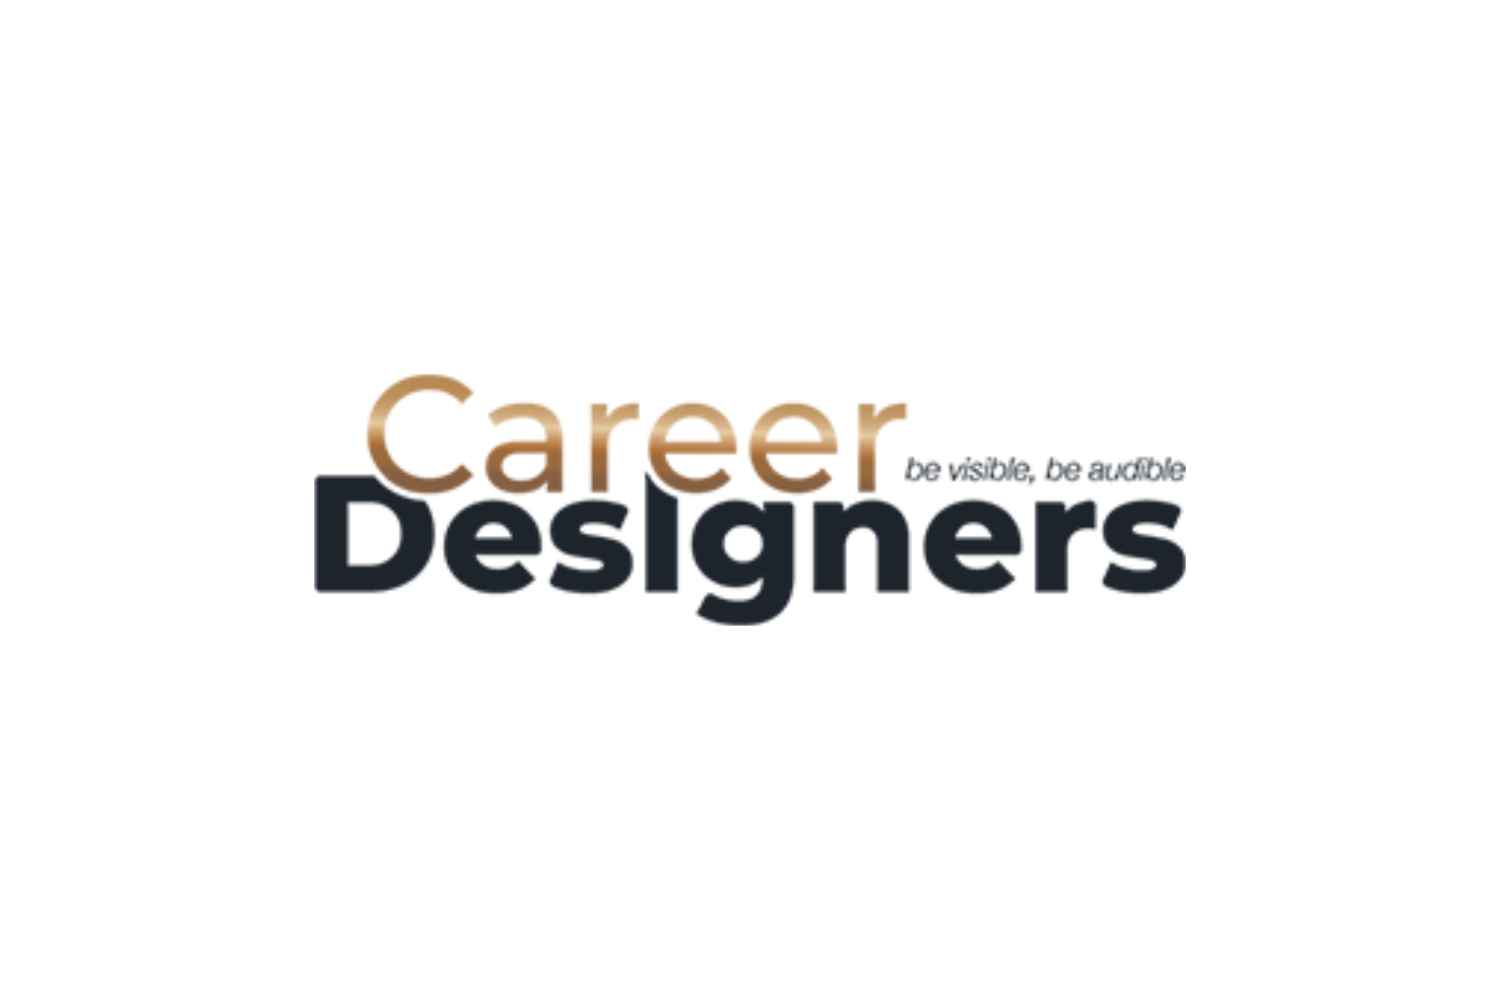 Career Designers